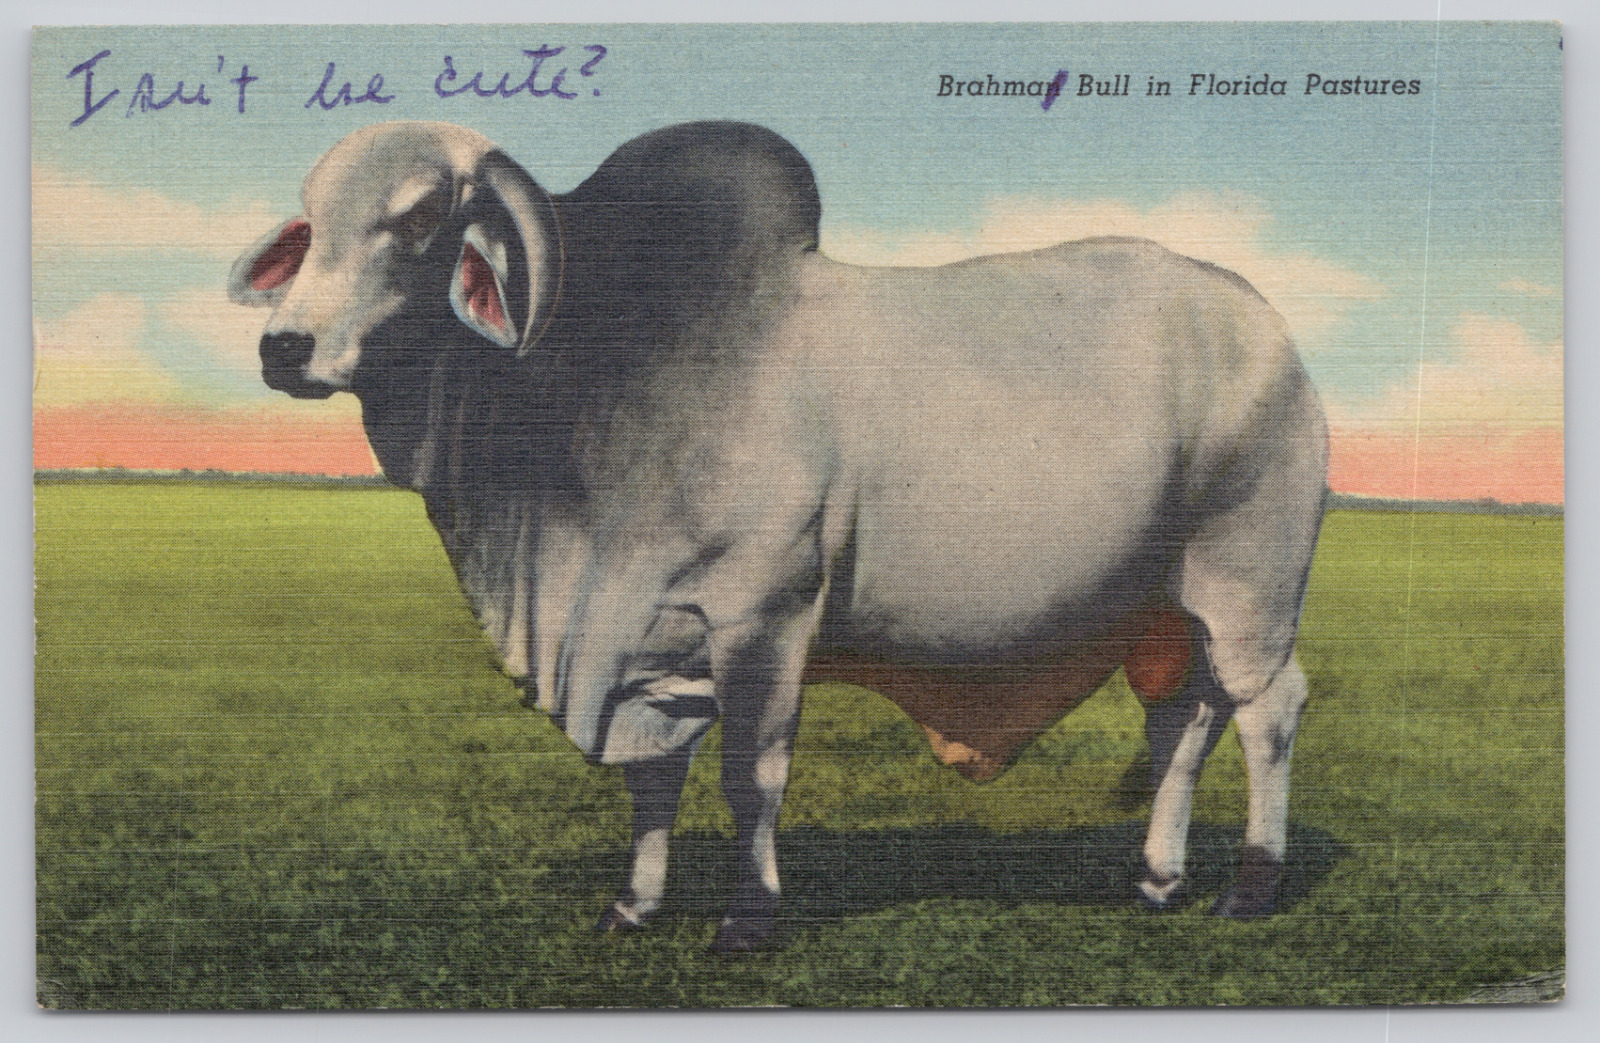 Brahman Bull in Florida Pastures, \'Isn\'t He Cute?\' c1935 Postcard, Cattle Ranch